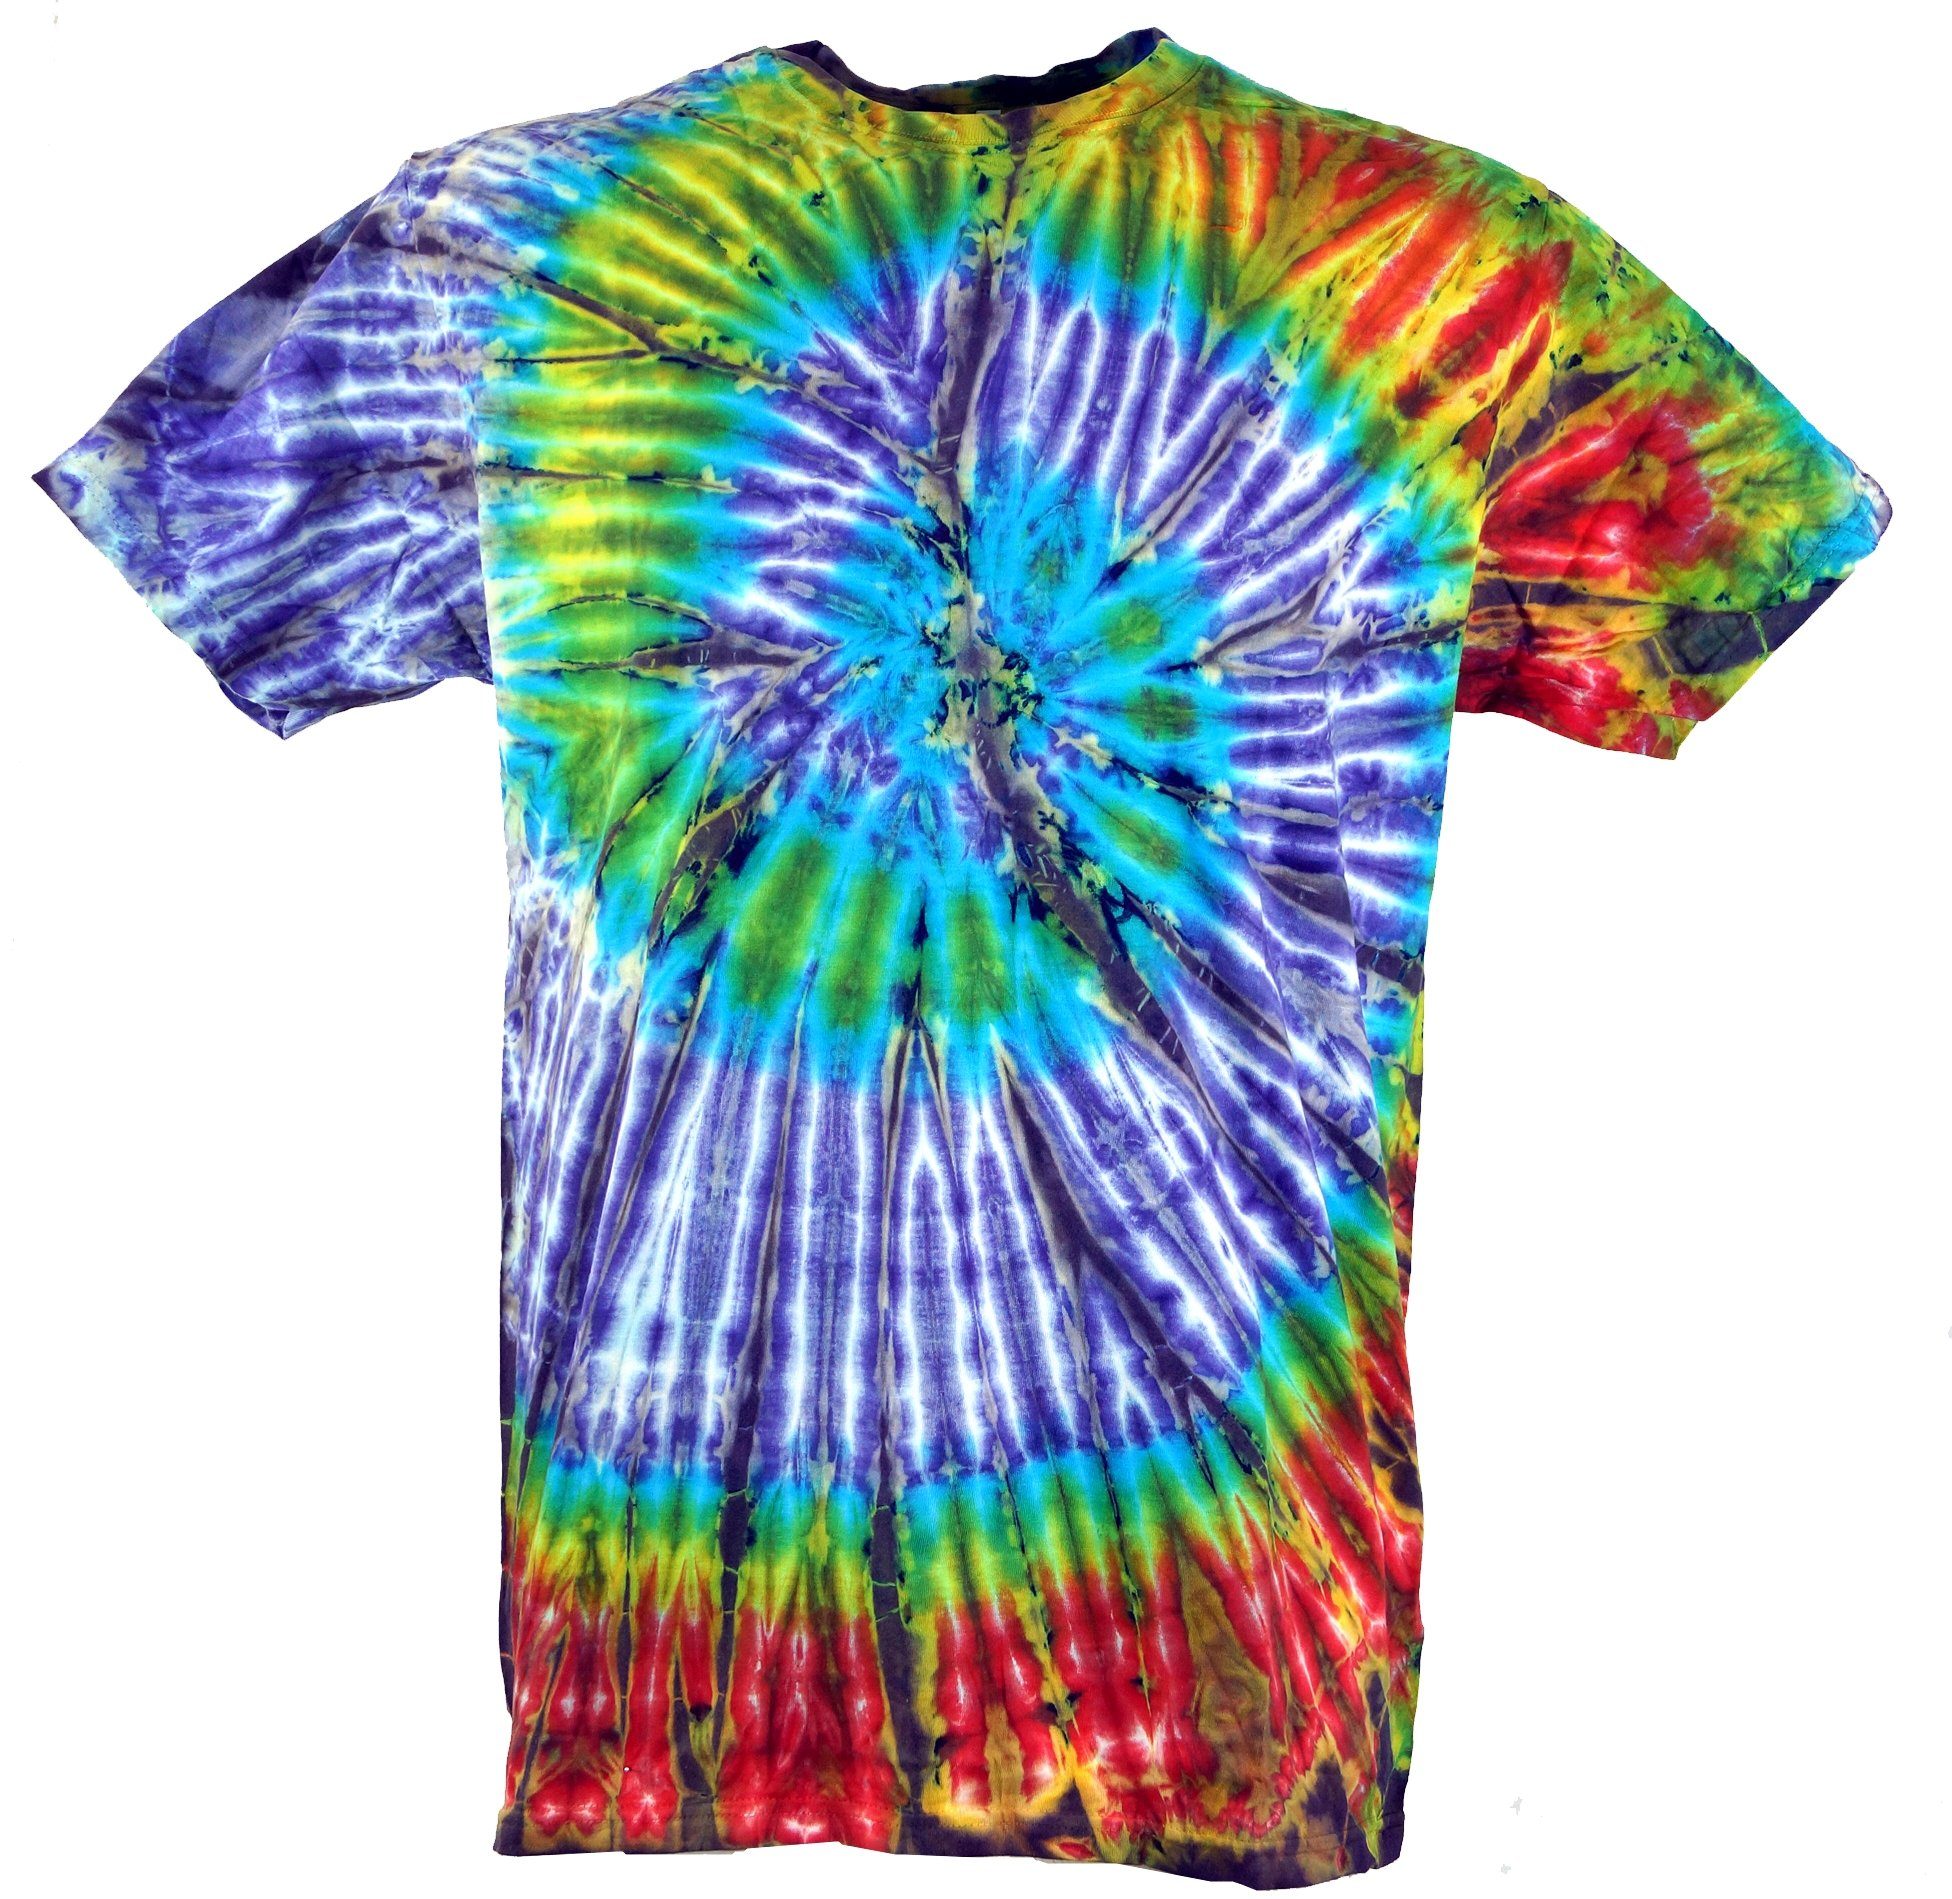 Guru-Shop T-Shirt Batik T-Shirt, Herren Kurzarm Tie Dye Shirt -.. Handarbeit, Hippie, Festival, Goa Style, alternative Bekleidung lila/grün Spirale